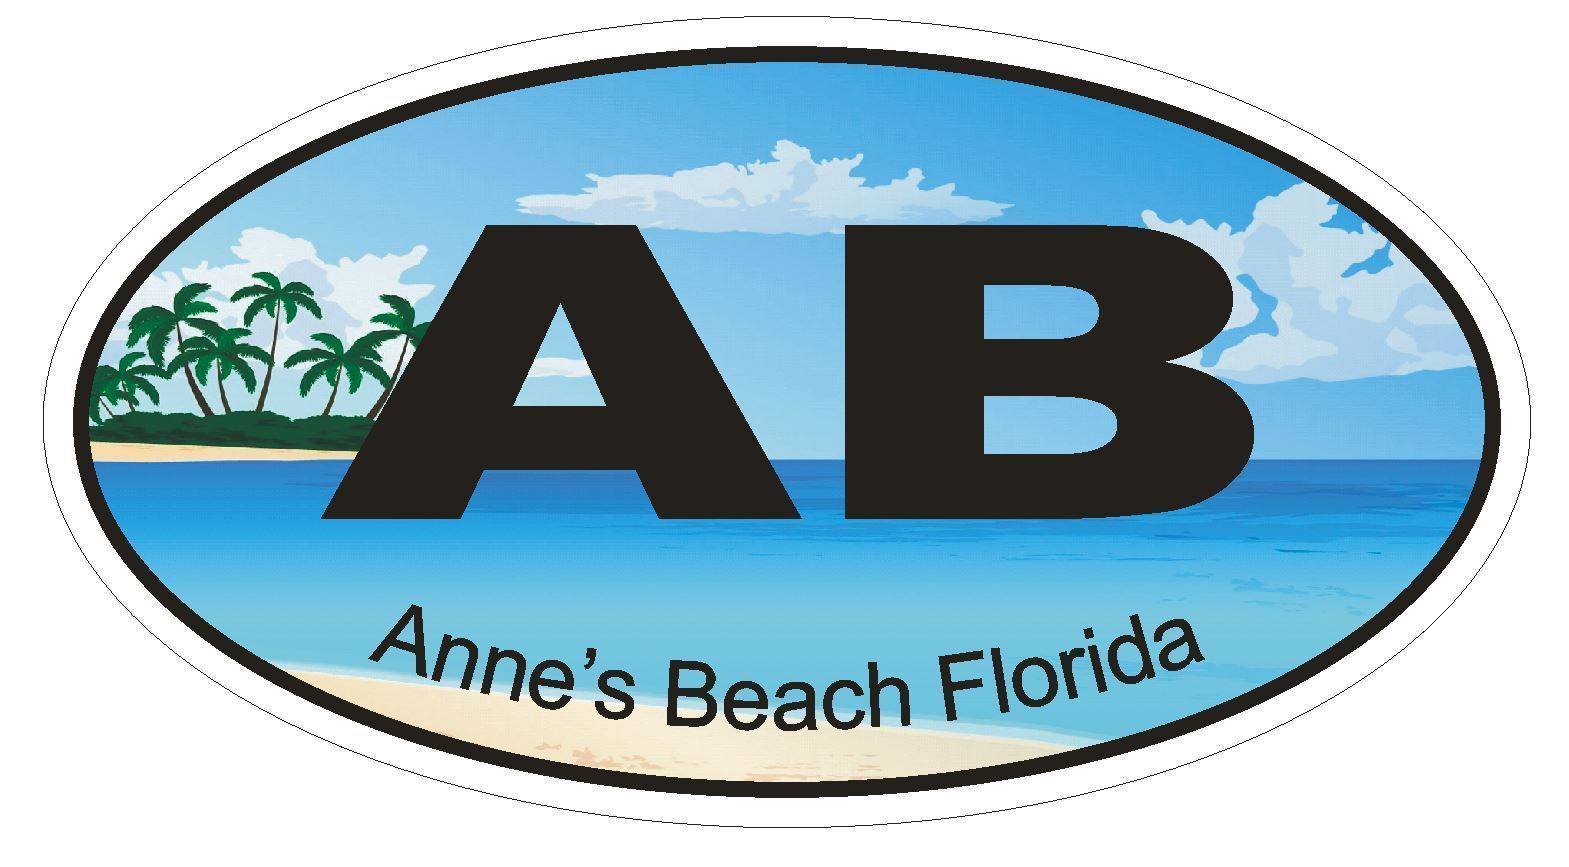 Anne's Beach Florida Oval Bumper Sticker or Helmet Sticker D1180 YOU CHOOSE SIZE - $1.39 - $75.00